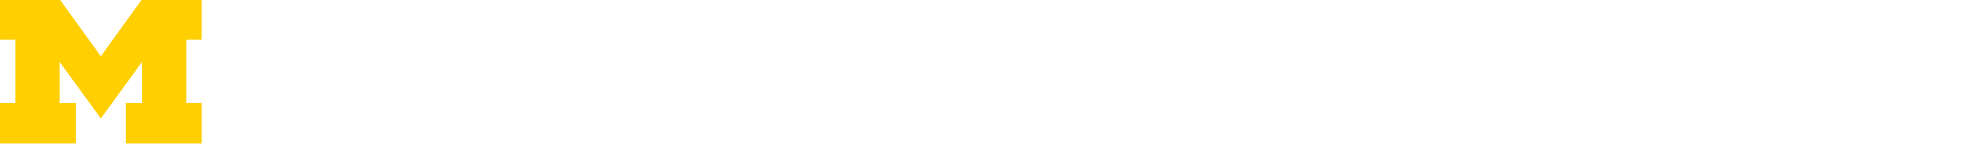 Michigan Center for Materials Characterization logo